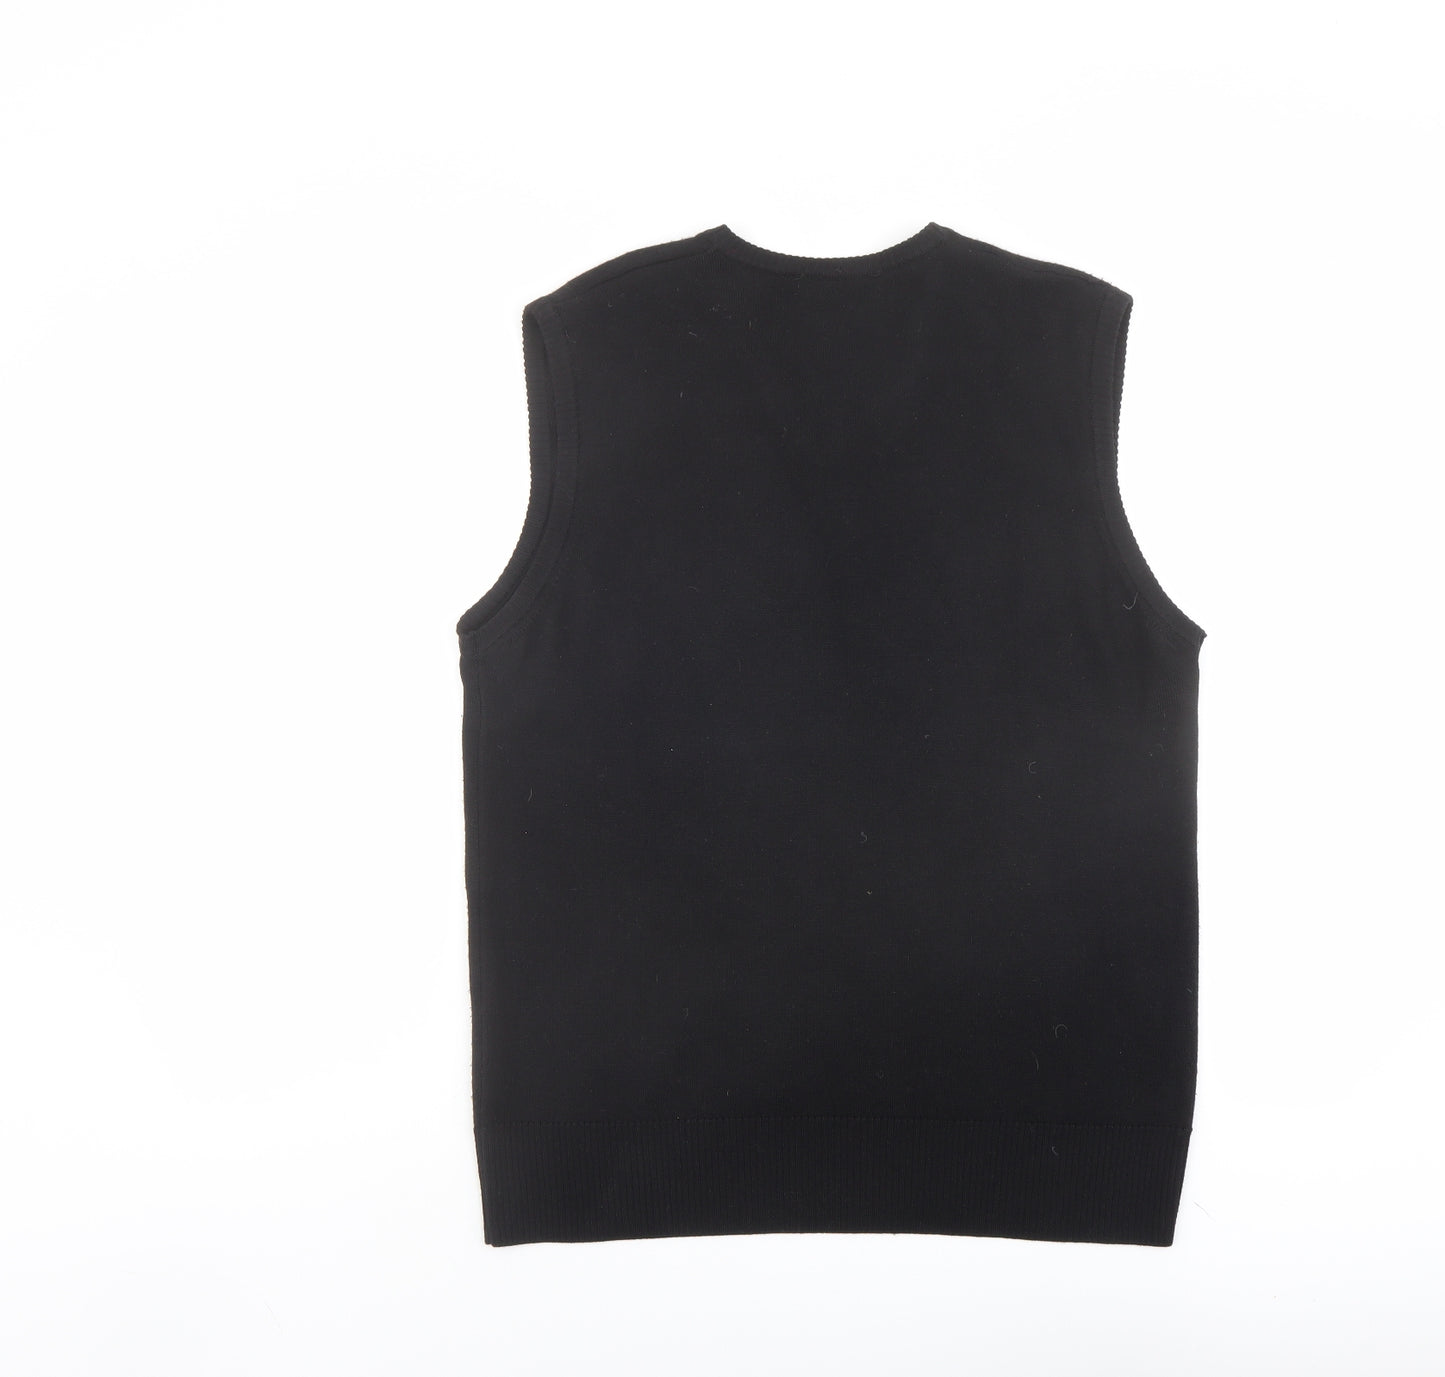 Sample Truth Mens Black V-Neck Wool Vest Jumper Size 2XL Sleeveless